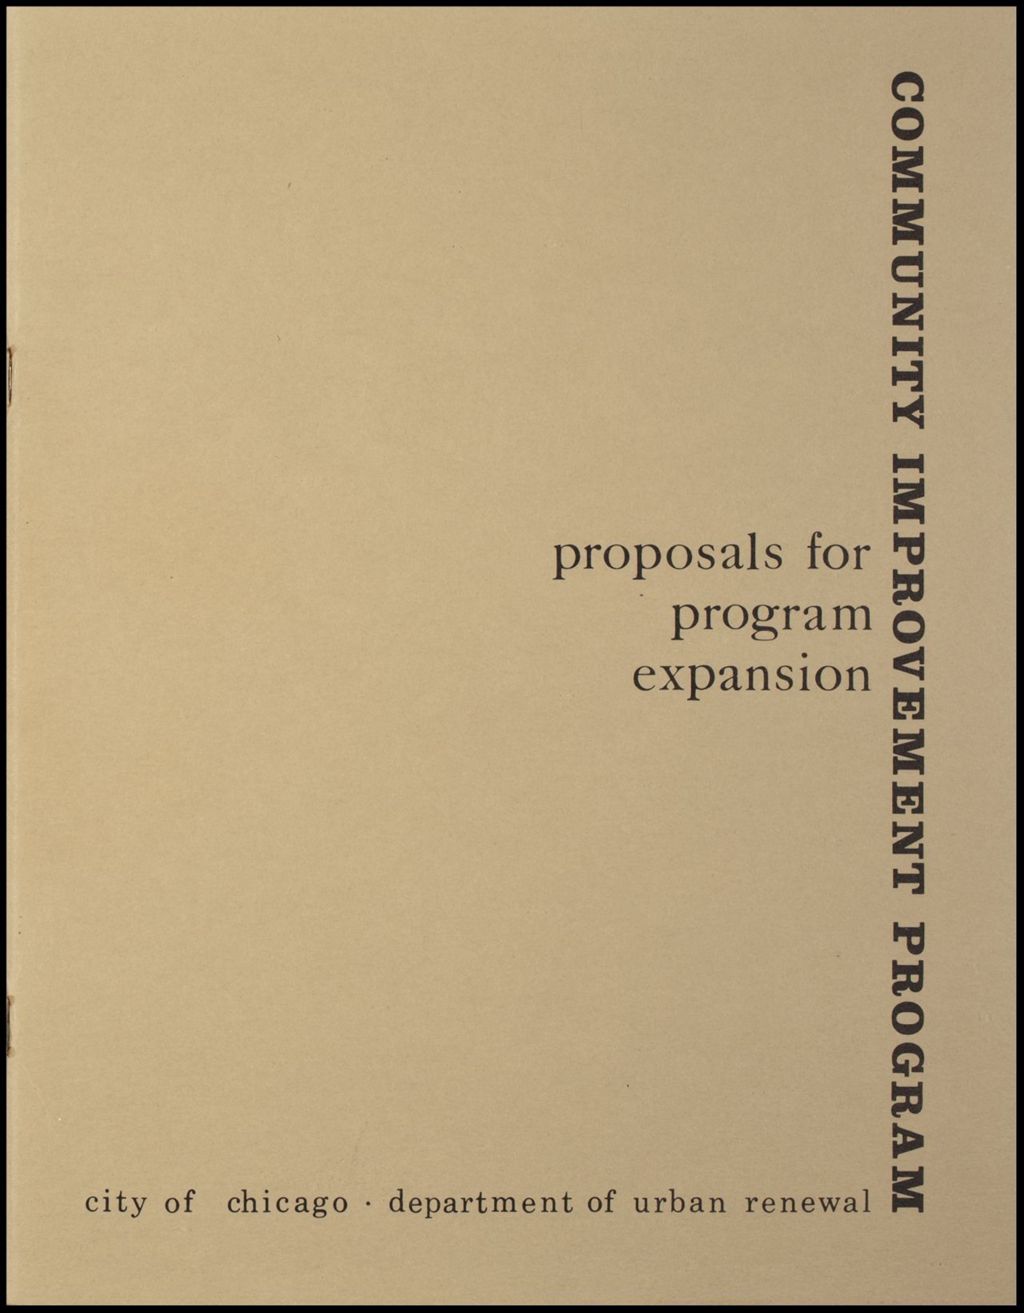 City of Chicago Community Improvement Program, 1967 (Folder III-1821)